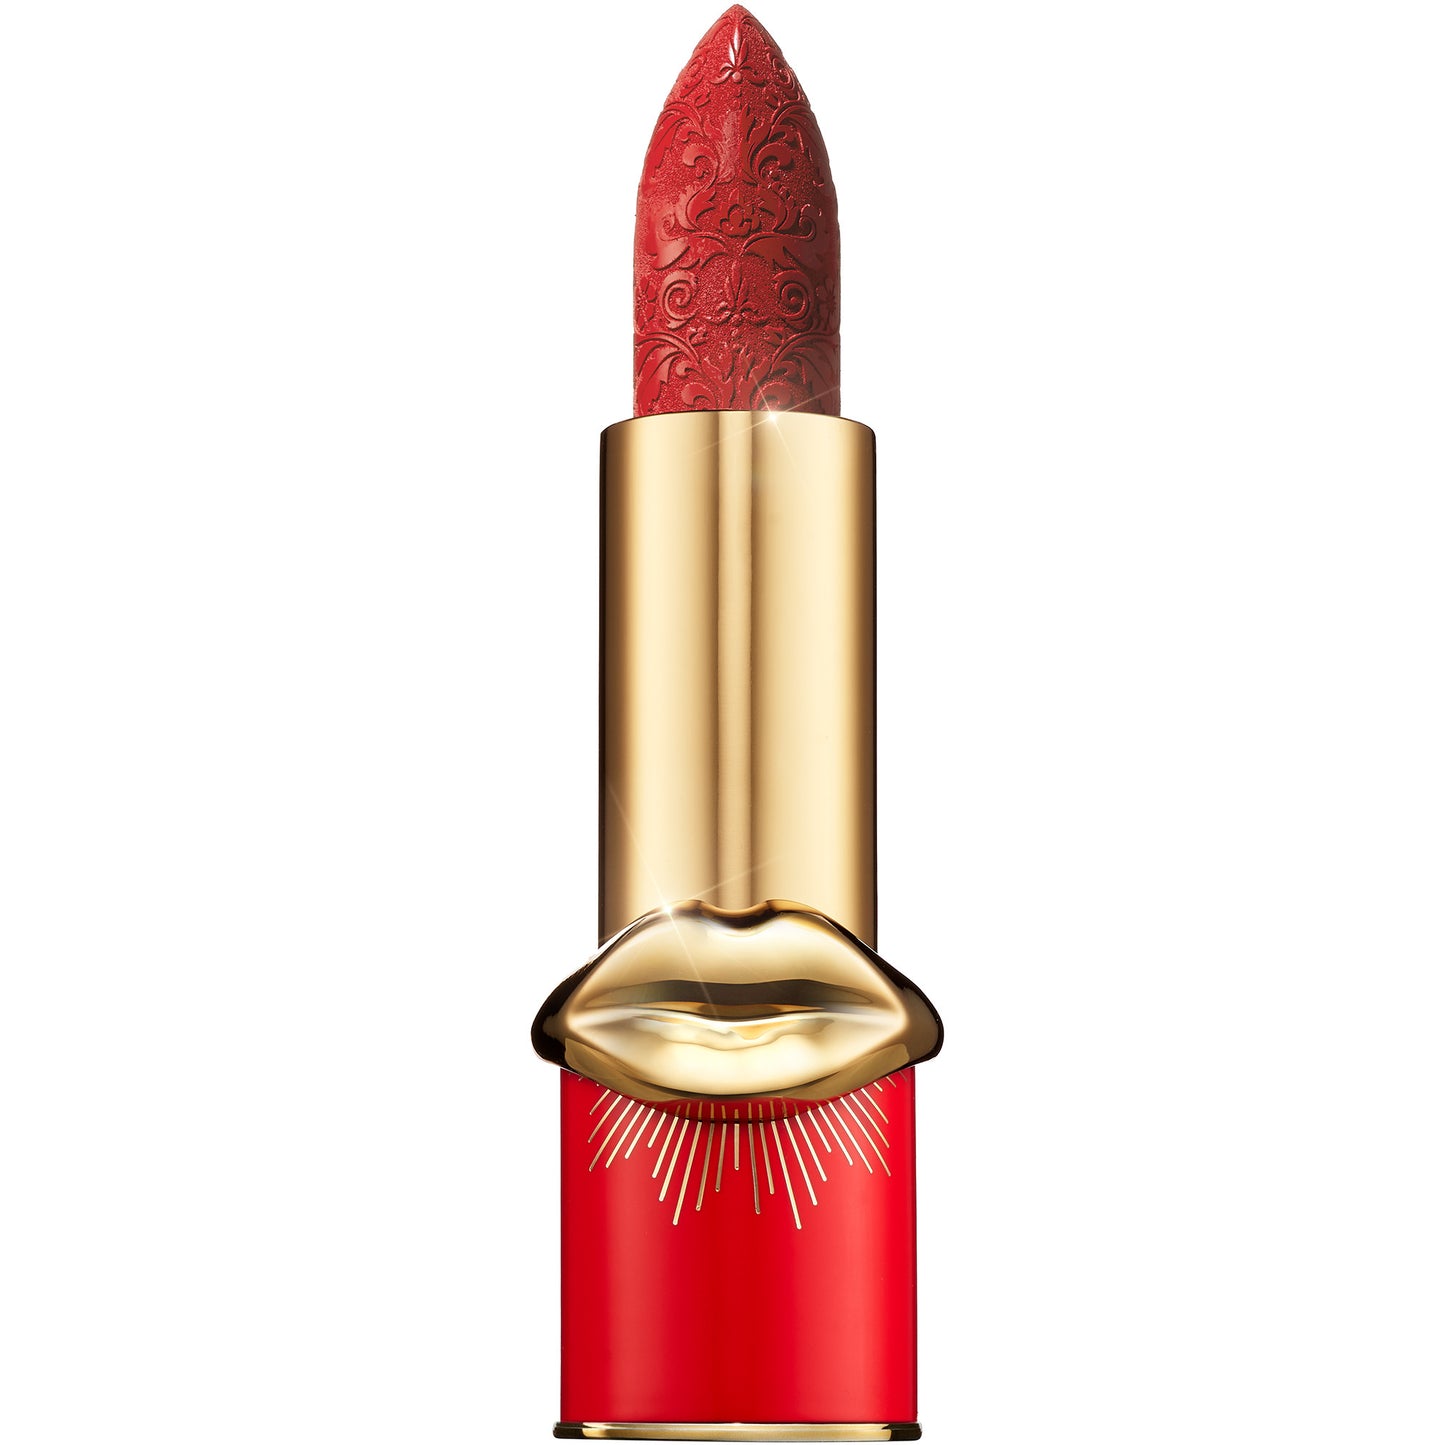 PAT McGRATH LABS Lunar New Year Collection: Lipstick